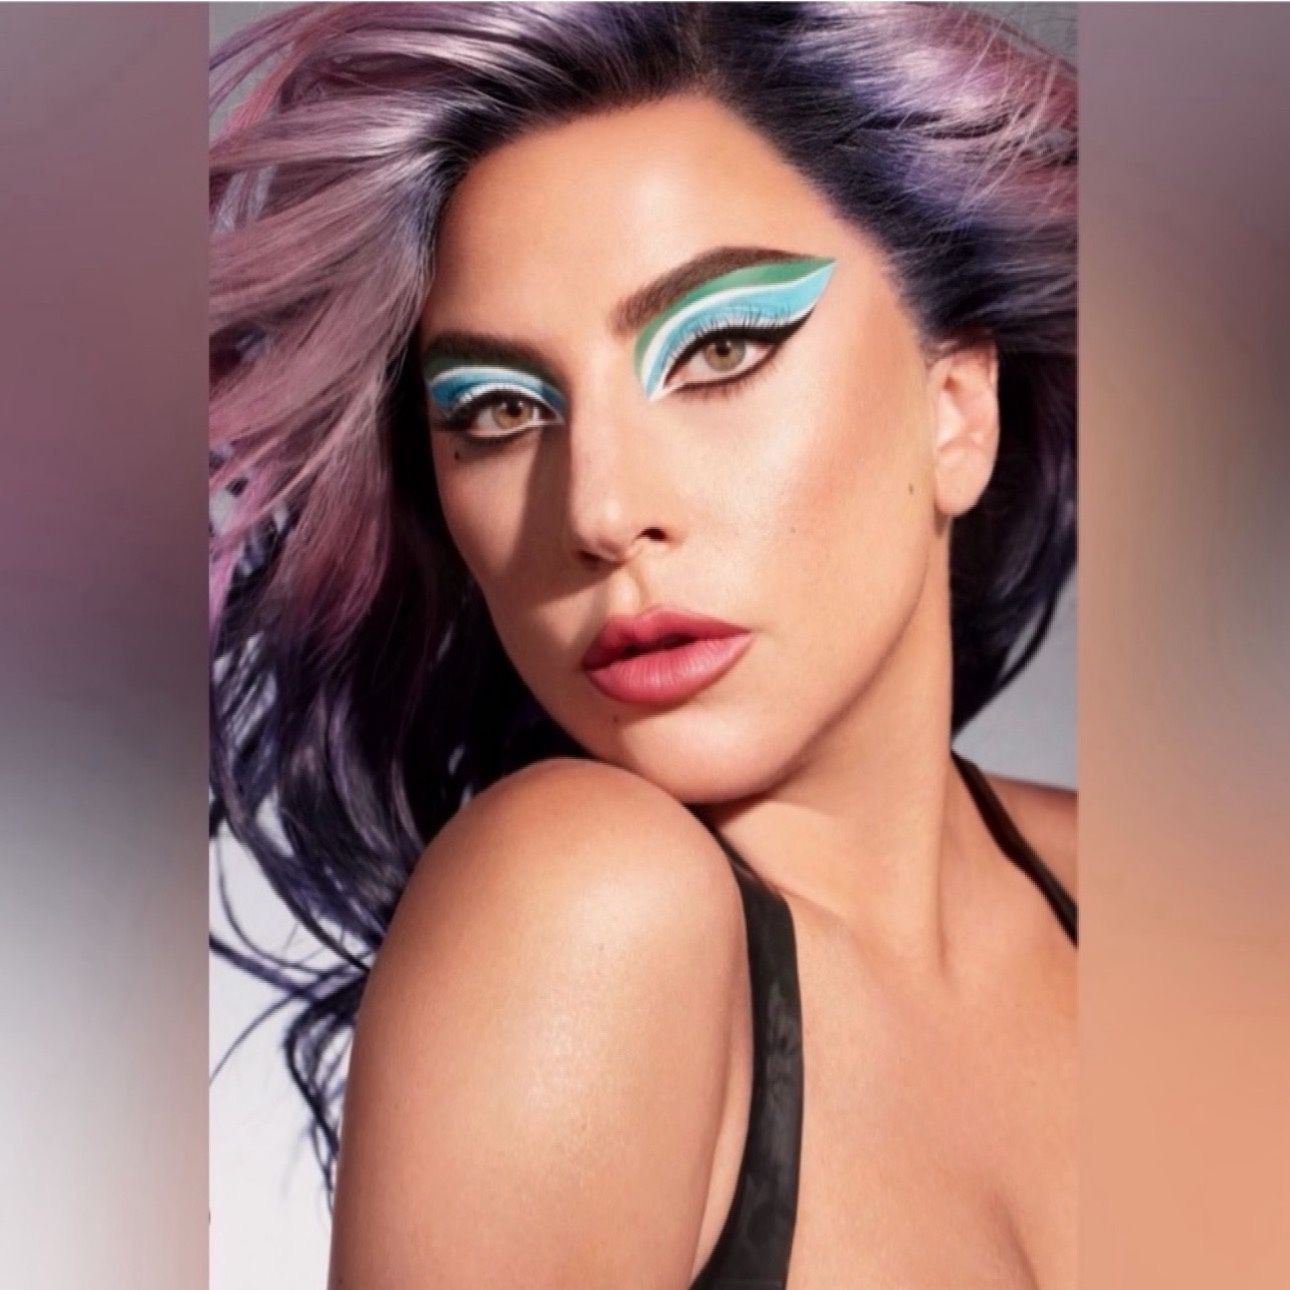 3 HAUS LABORATORIES Lady Gaga Liquid Shimmer Powder Eyeshadow Blue Jean Dream NEW IN BOX Full Size .12 Oz NIB Sparkle Shade Glam Attack Line